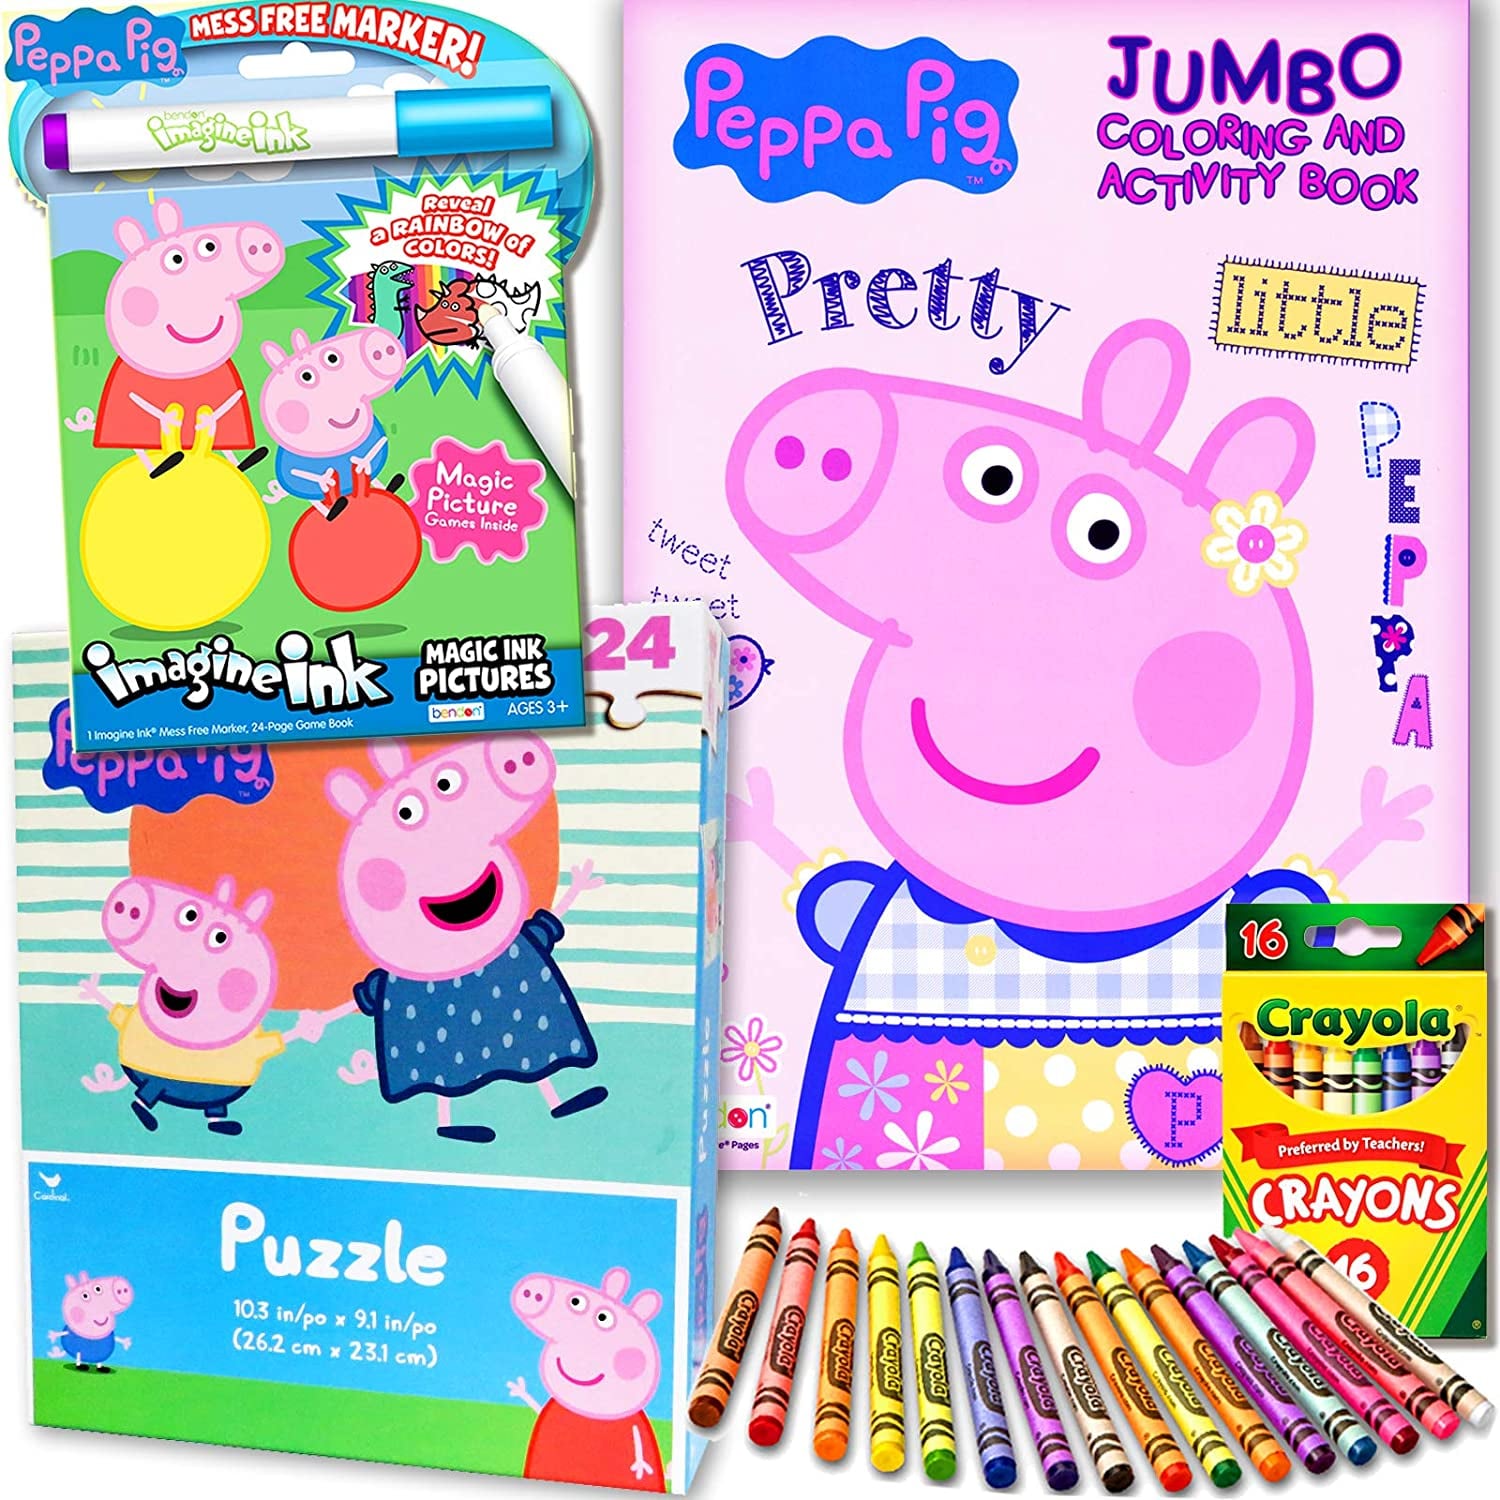 Peppa Pig Carry Along Colouring Set 